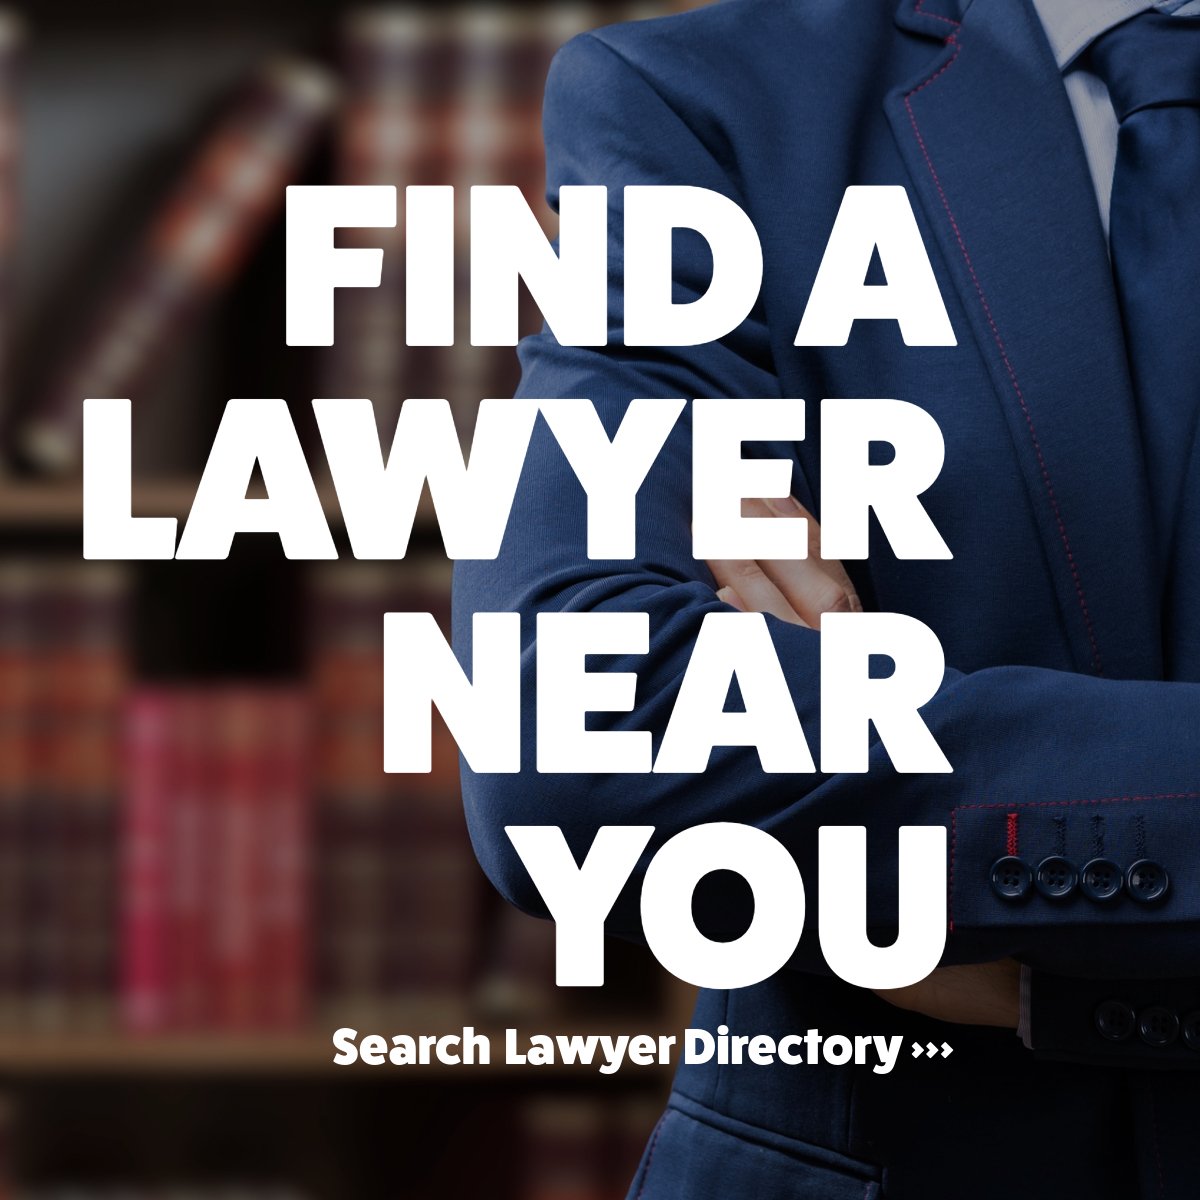 Find a Lawyer Near You